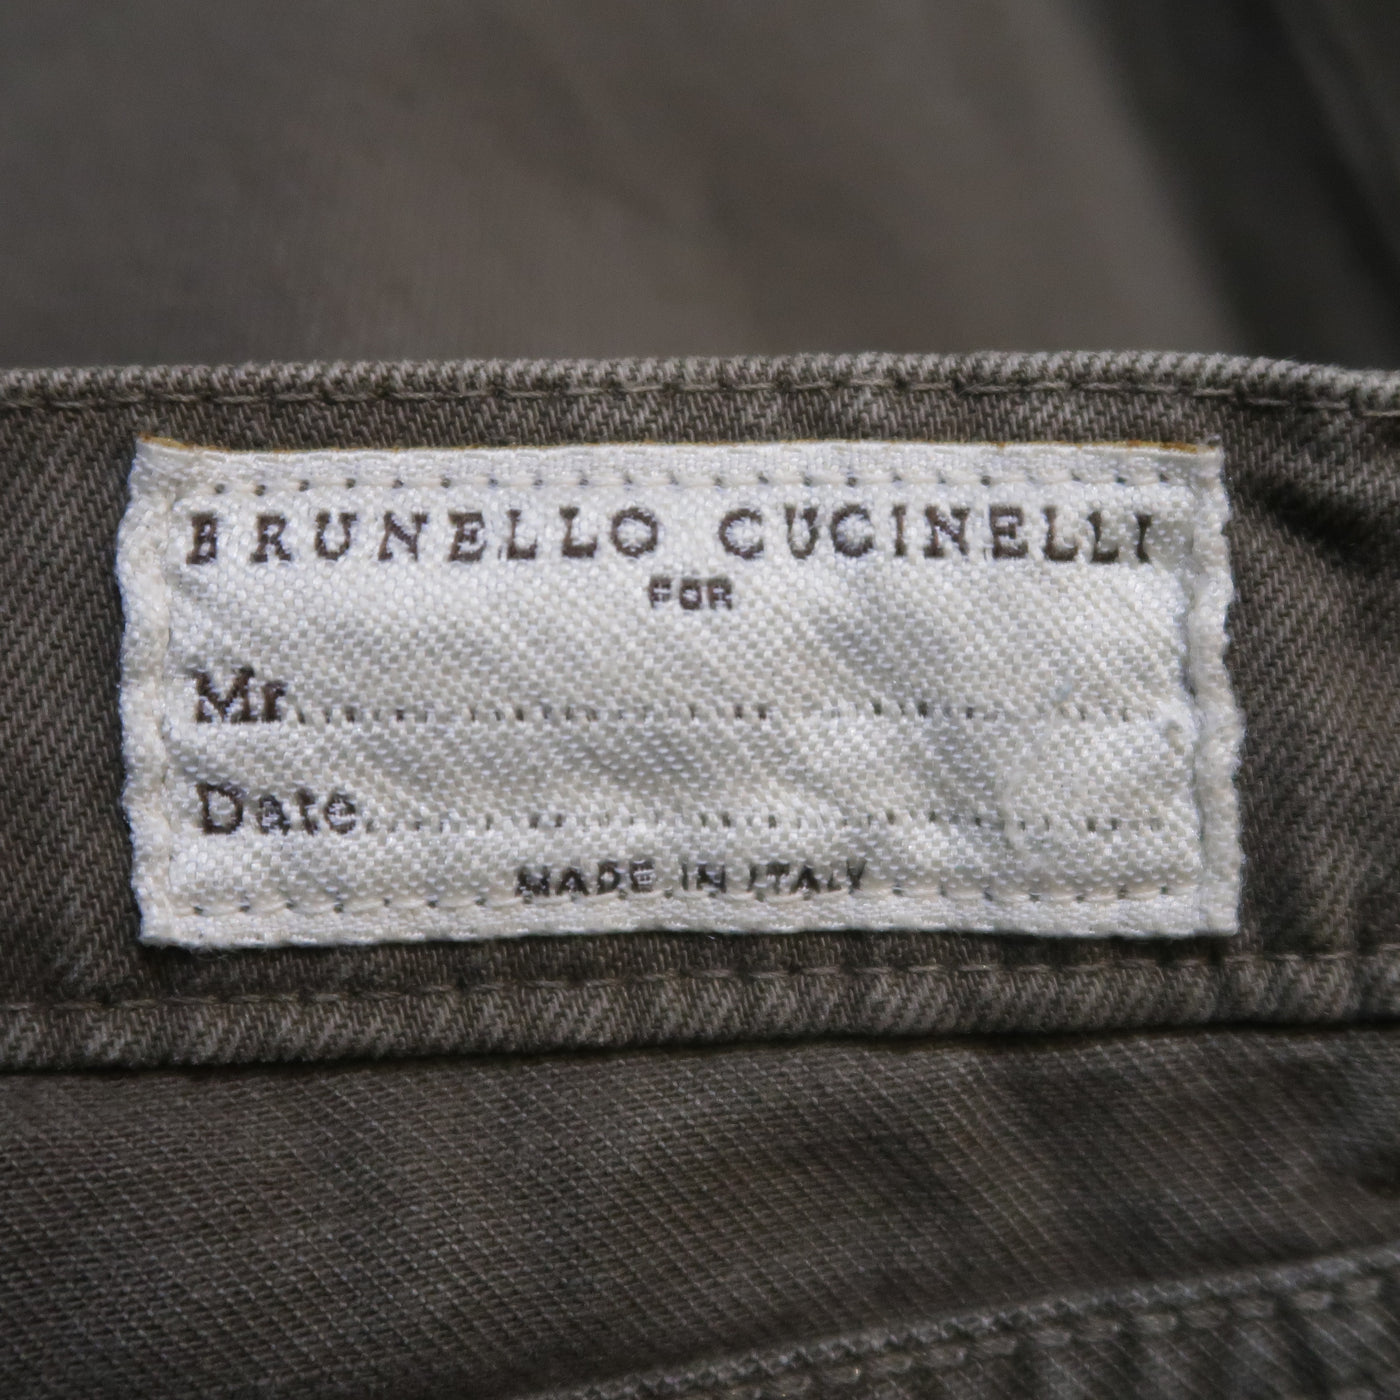 BRUNELLO CUCINELLI Size 30 x 28 Taupe Solid Denim Jeans